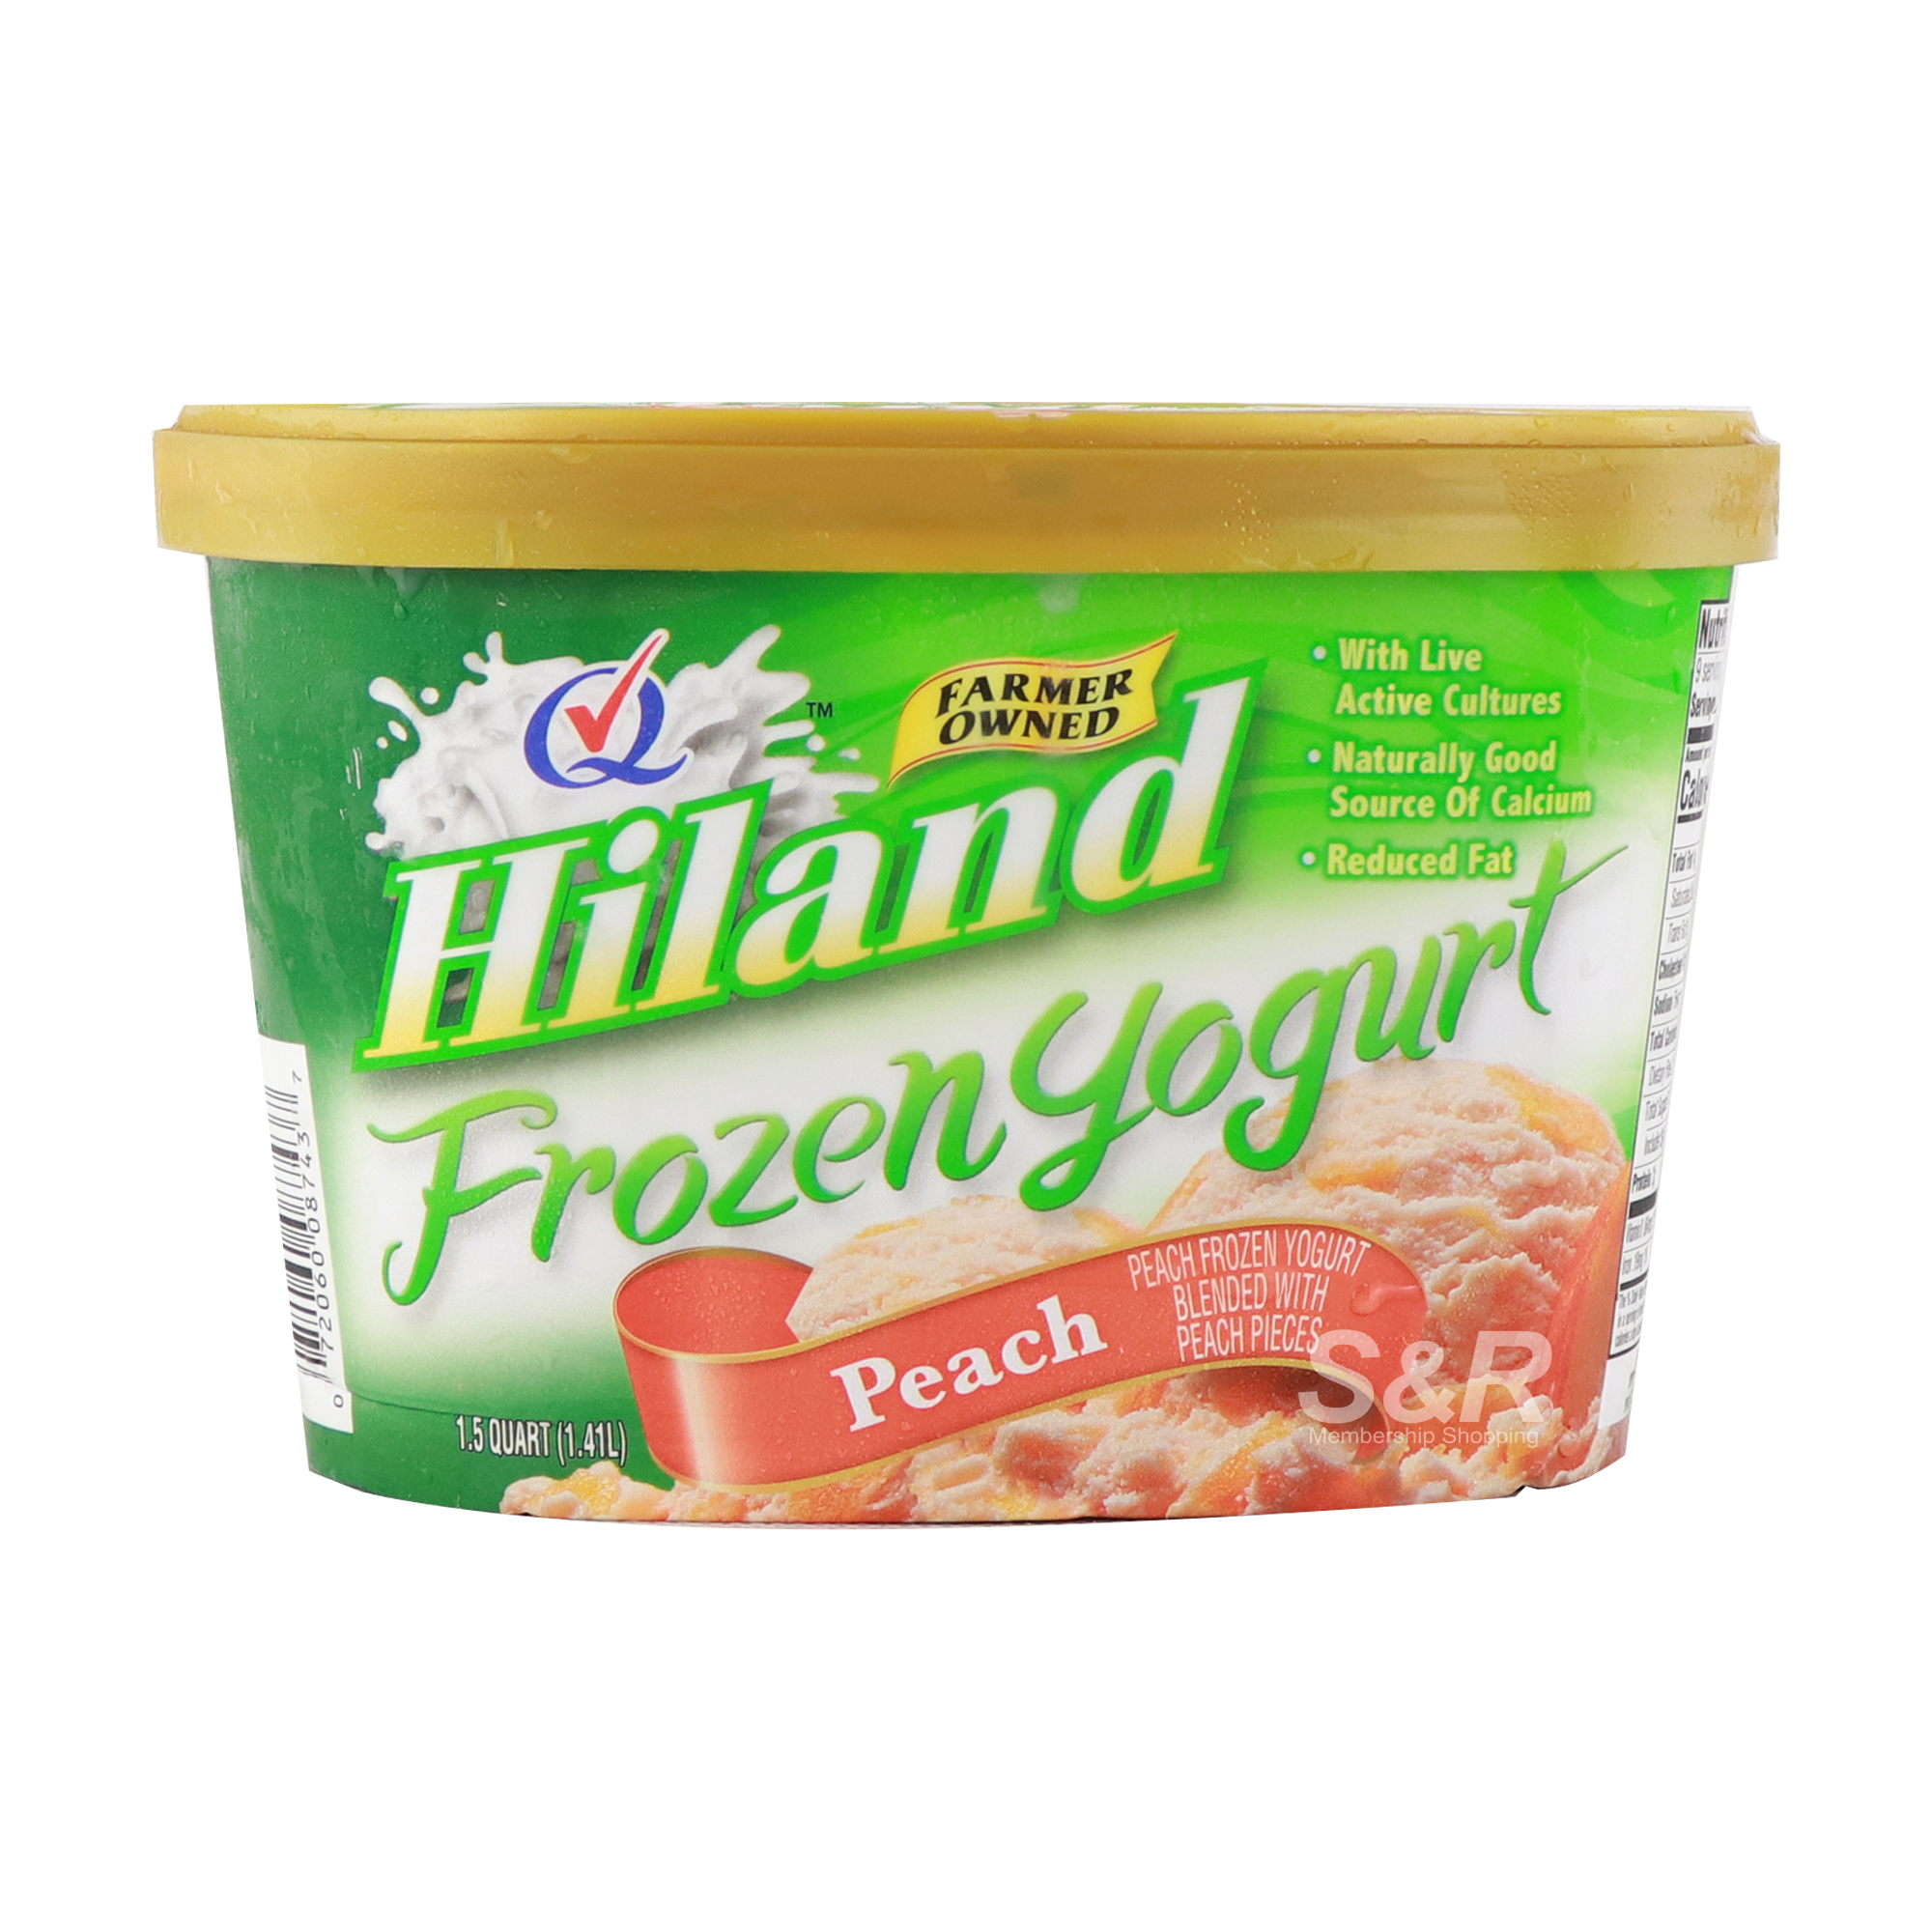 Hiland Premium Frozen Yogurt Peach Flavor 1.41L